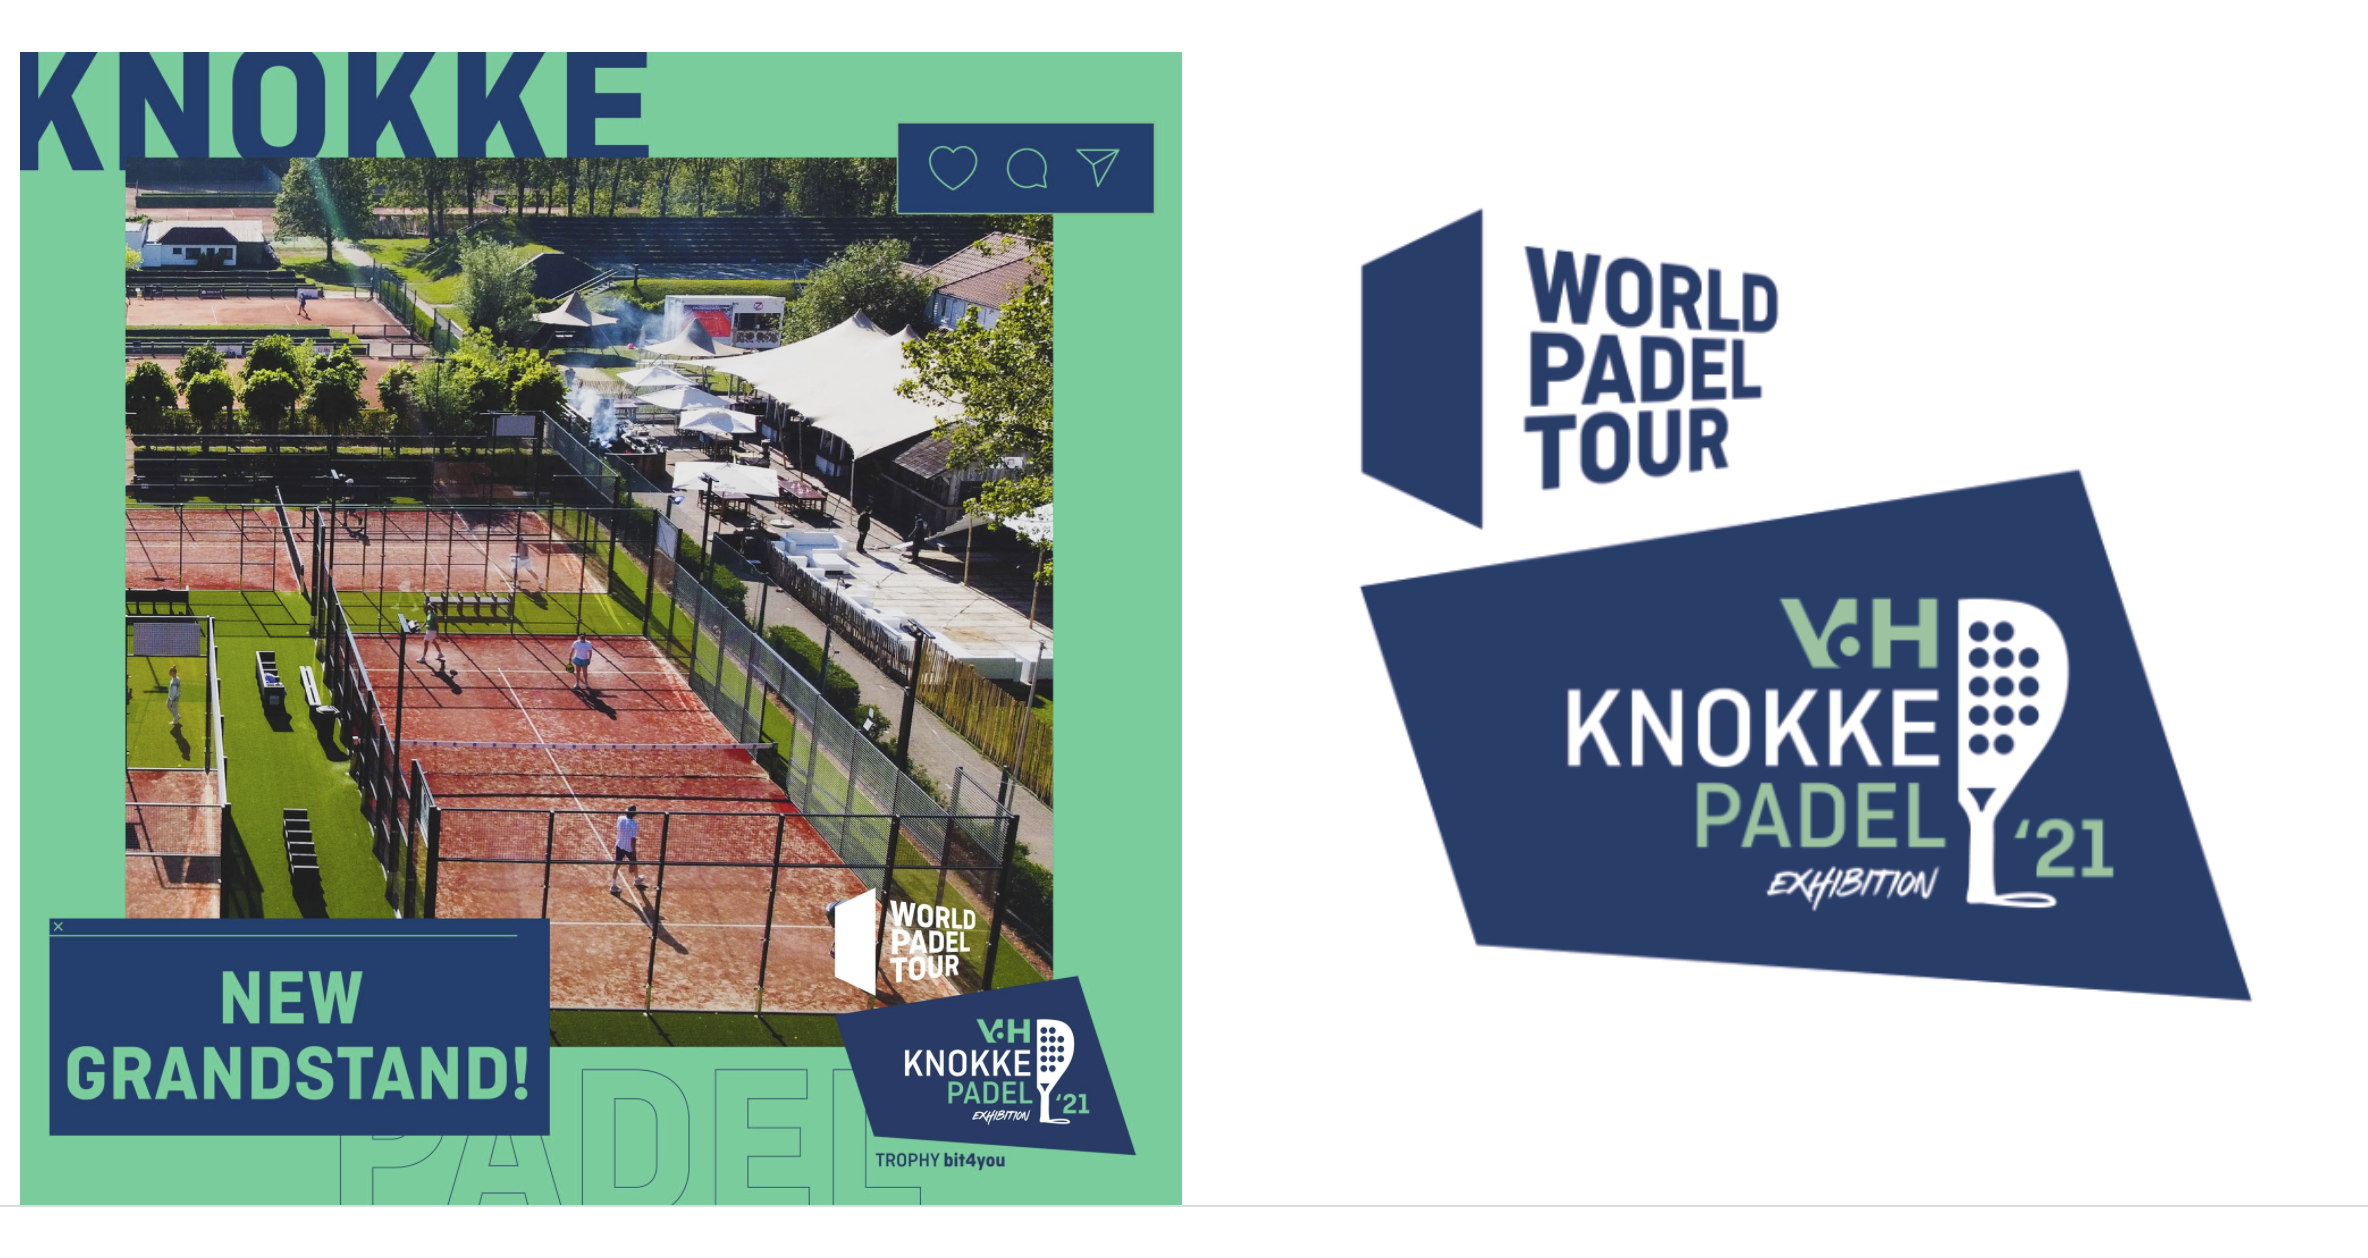 World Padel Tour Knokke 2021: Es ist soweit!